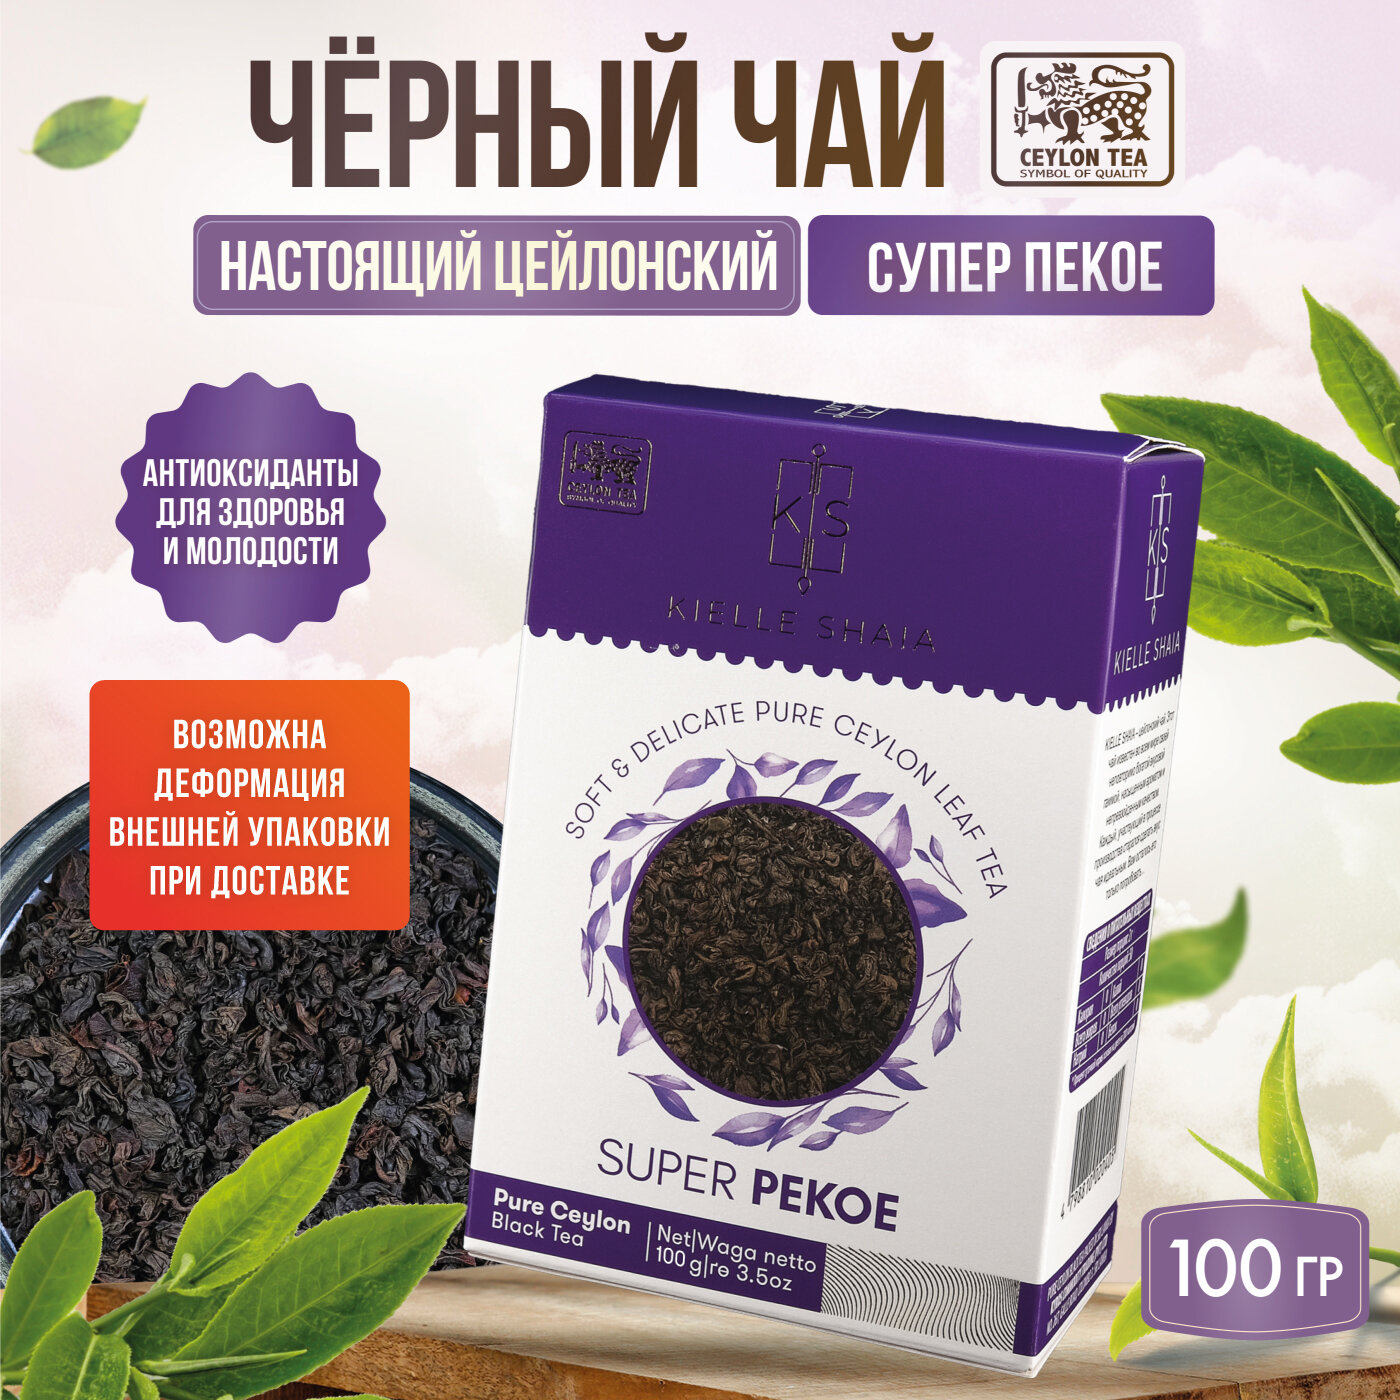 Чай черный листовой цейлонский SUPER PEKOE KIELLE SHAIA, 100 г